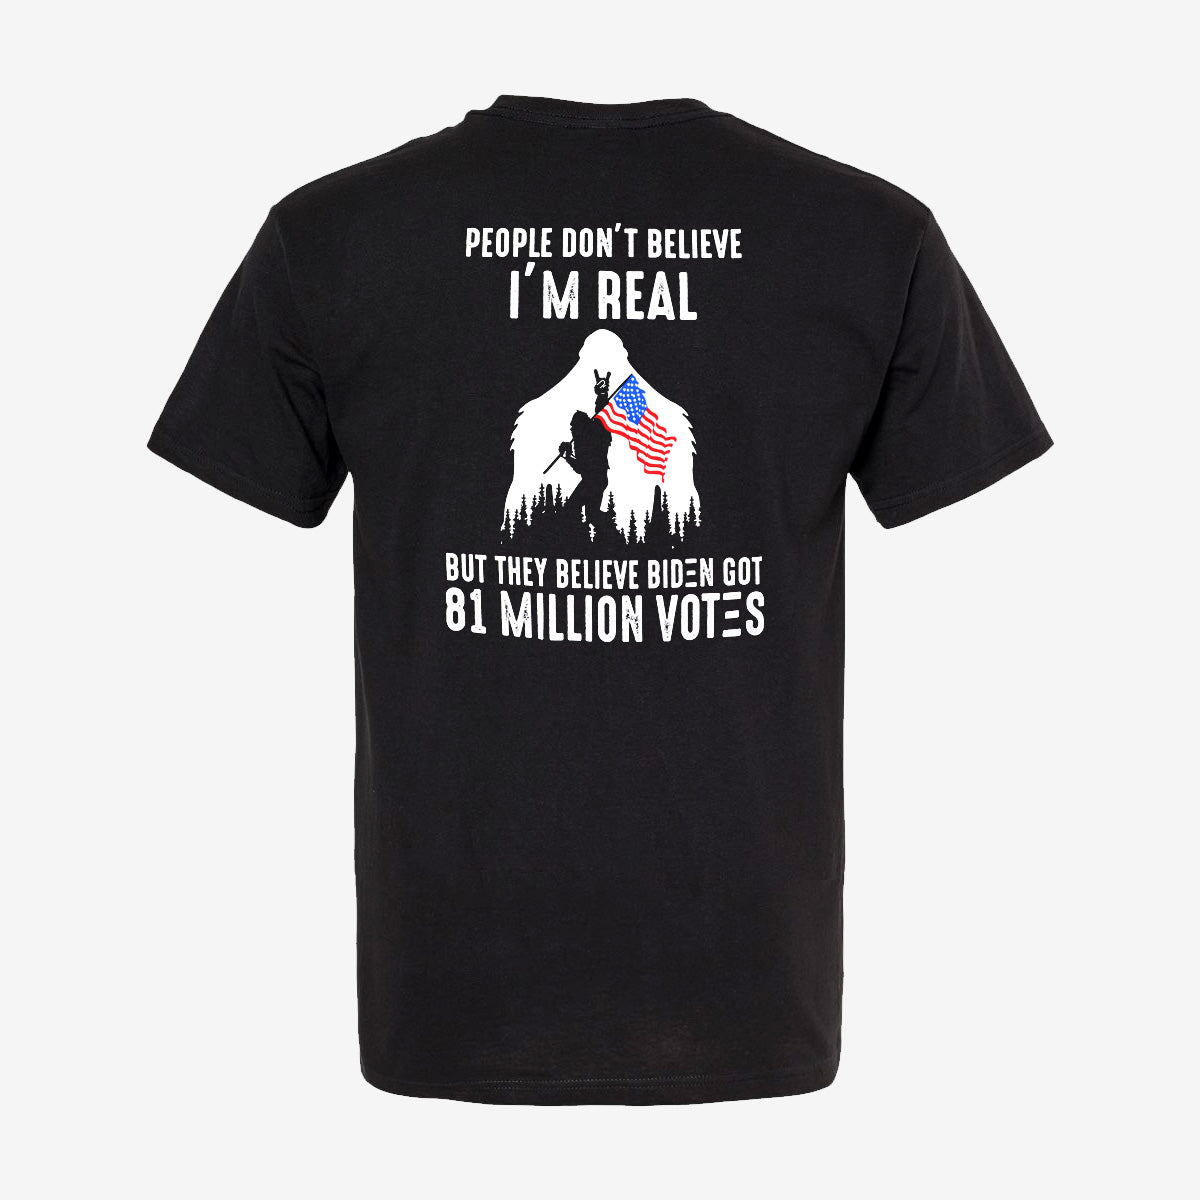 81 Million Votes T-Shirt